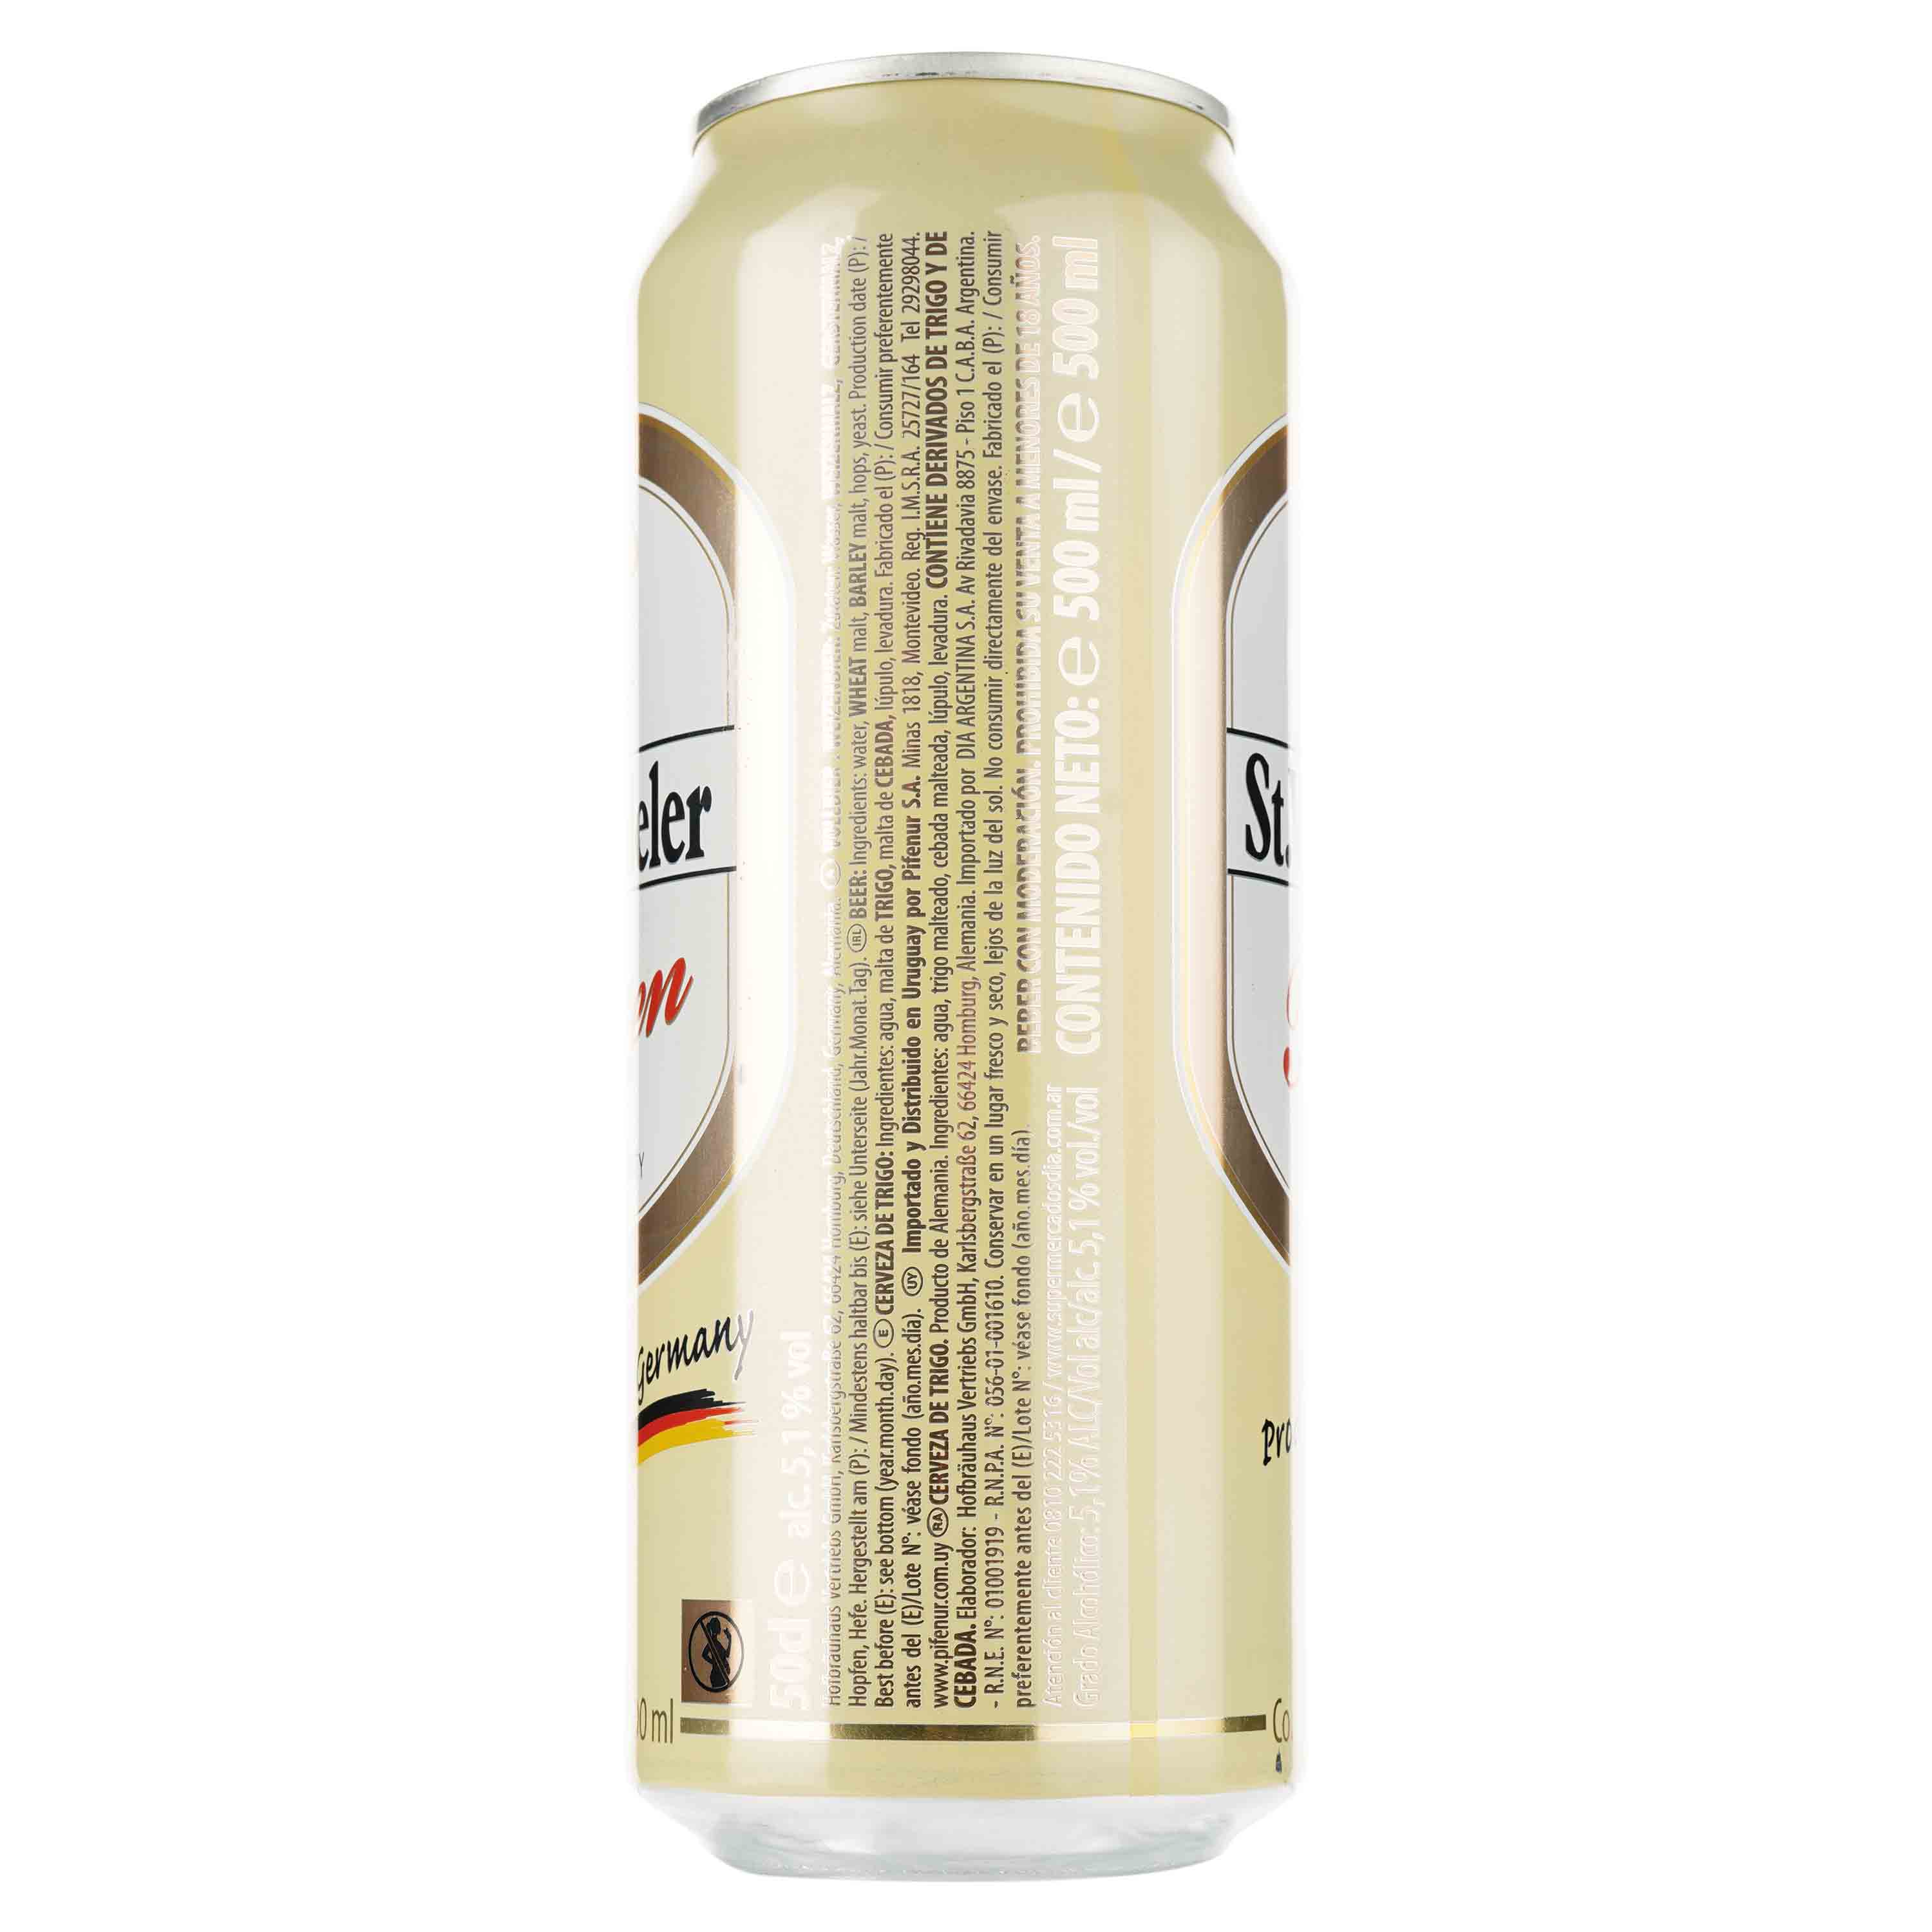 Пиво St.Wendeler Weizen светлое, 5.1%, ж/б, 0.5 л - фото 2